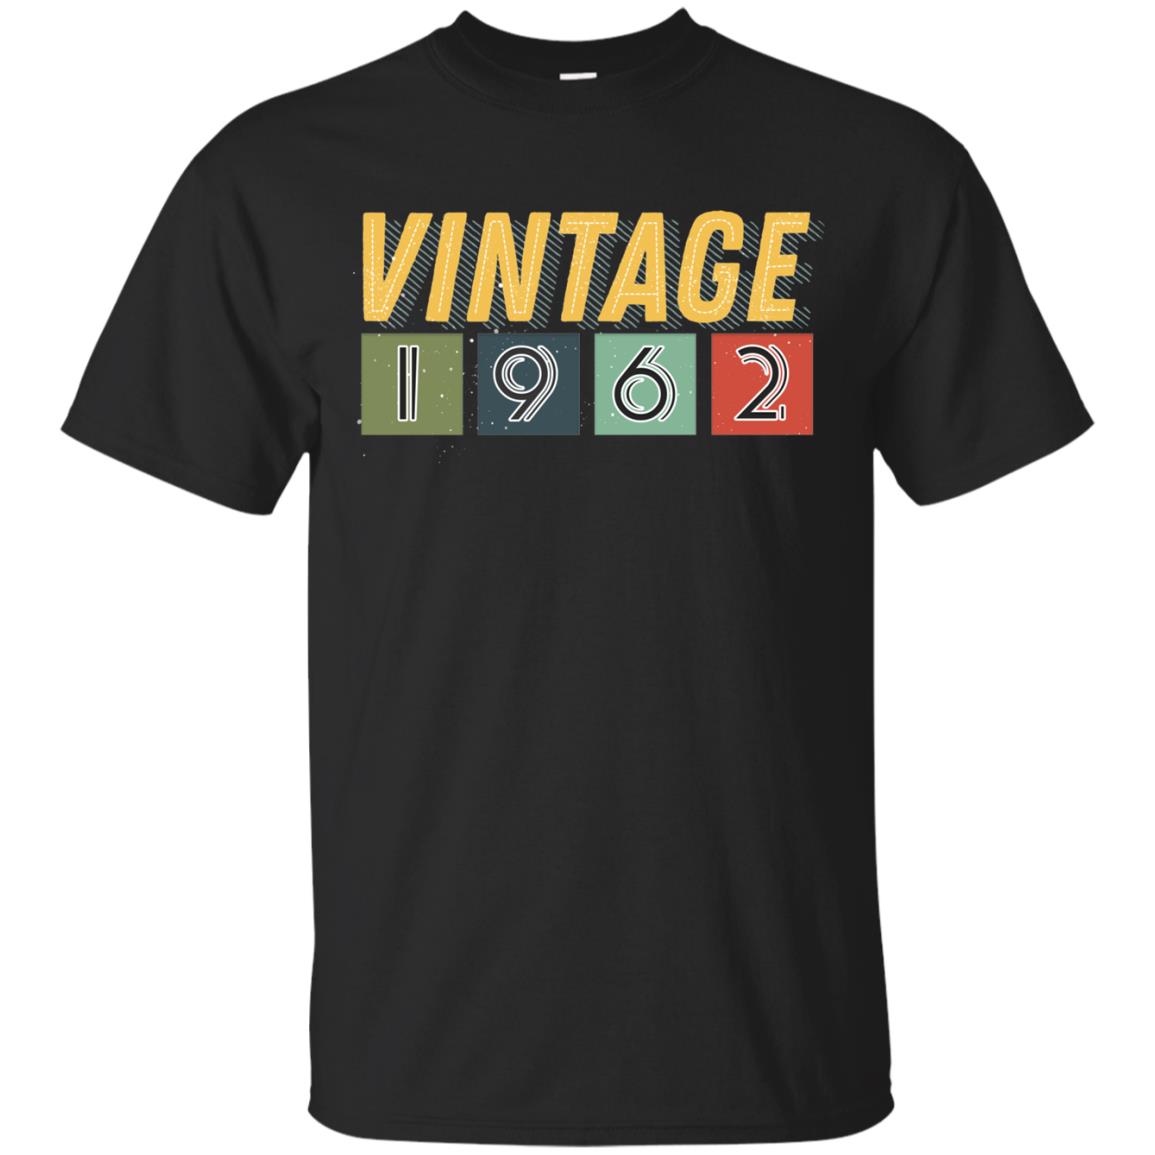 Vintage 1962 56th Birthday Gift Shirt For Mens Or WomensG200 Gildan Ultra Cotton T-Shirt